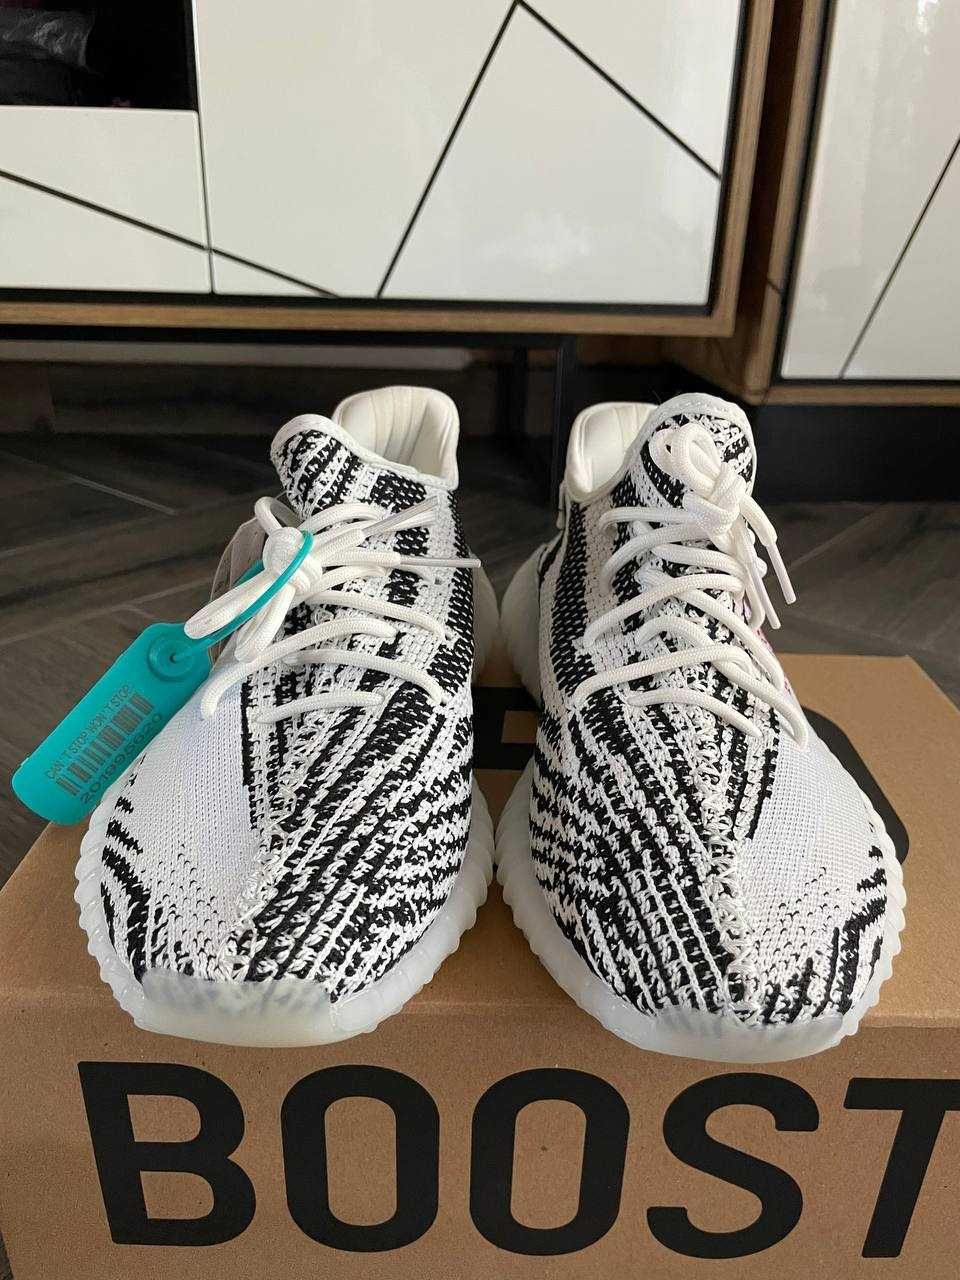 Yeezy Boost 350 Zebra